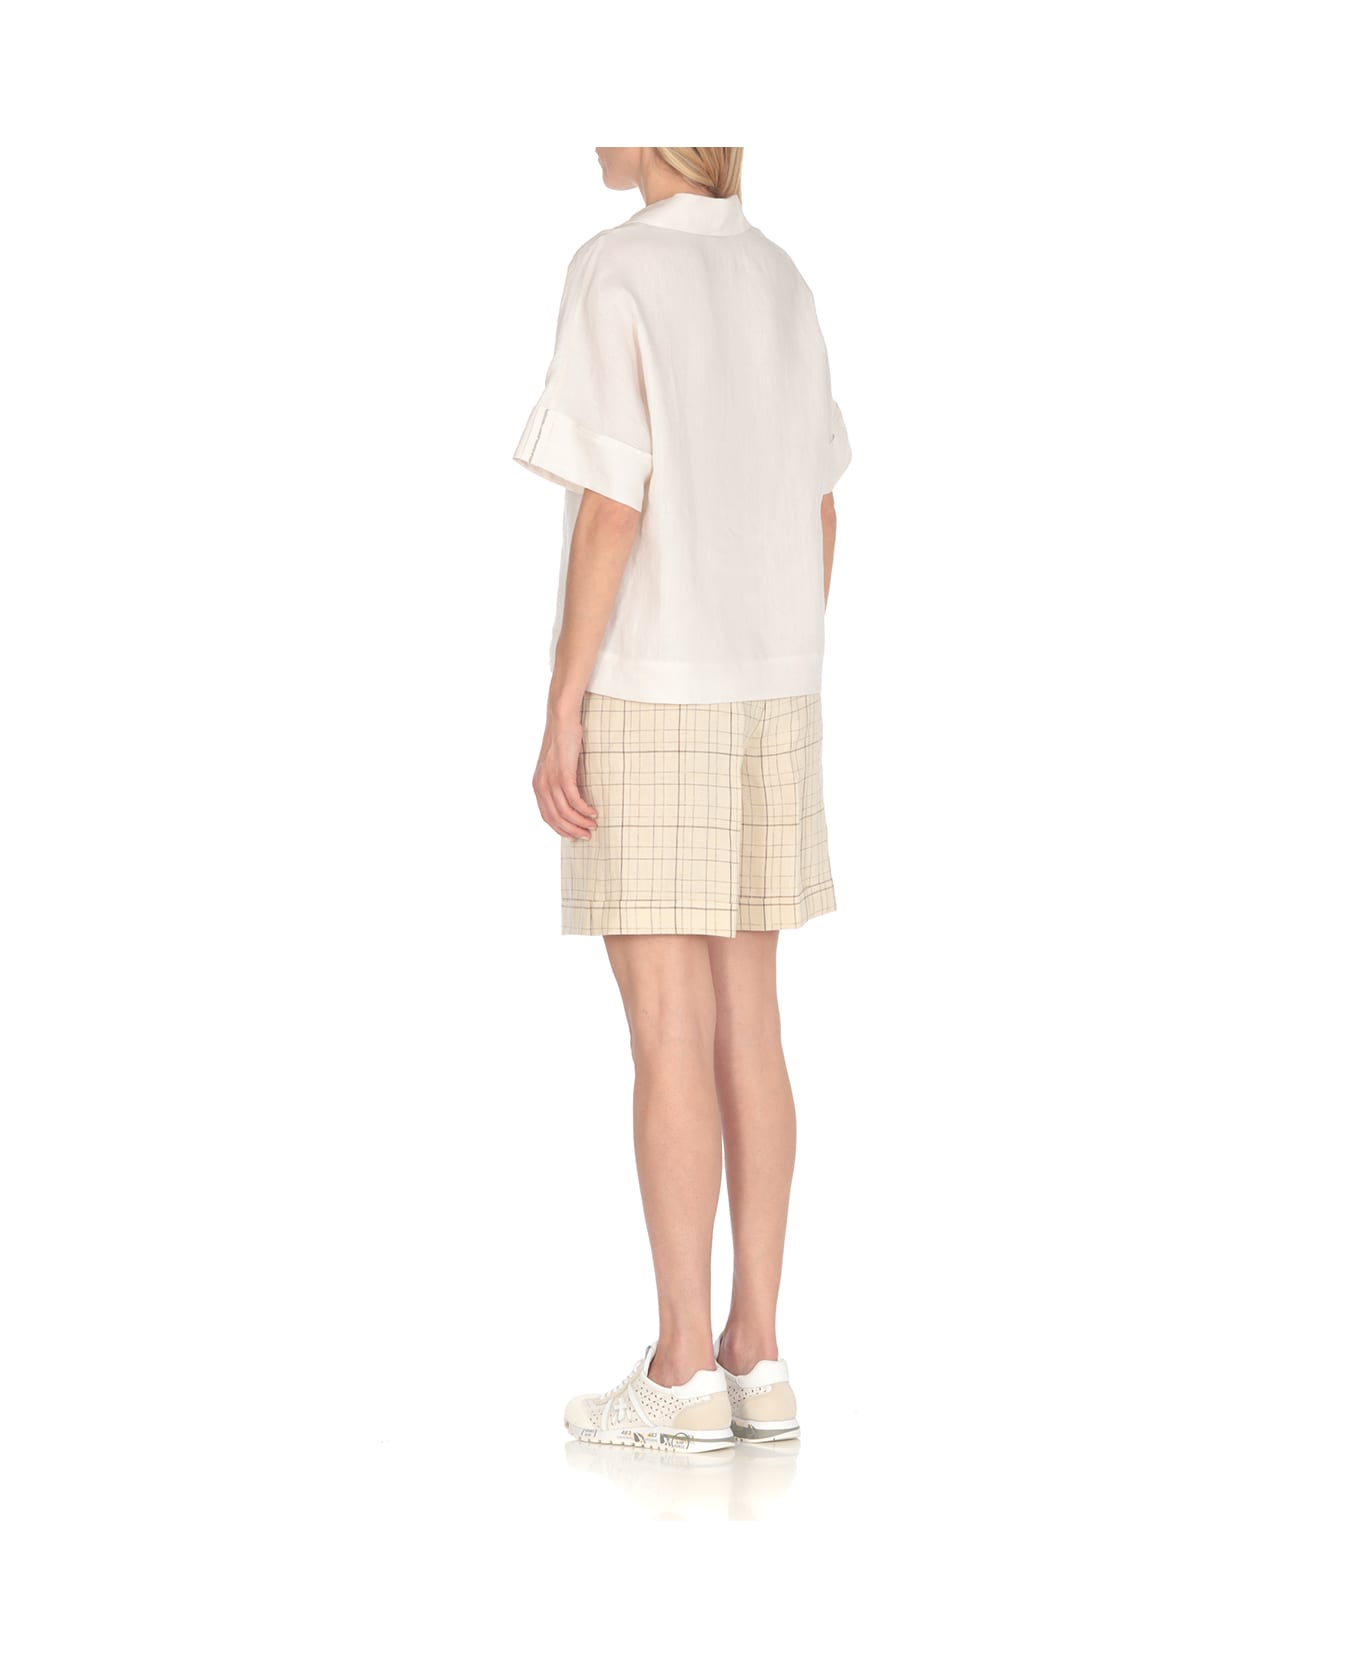 Peserico Linen Shirt - Beige